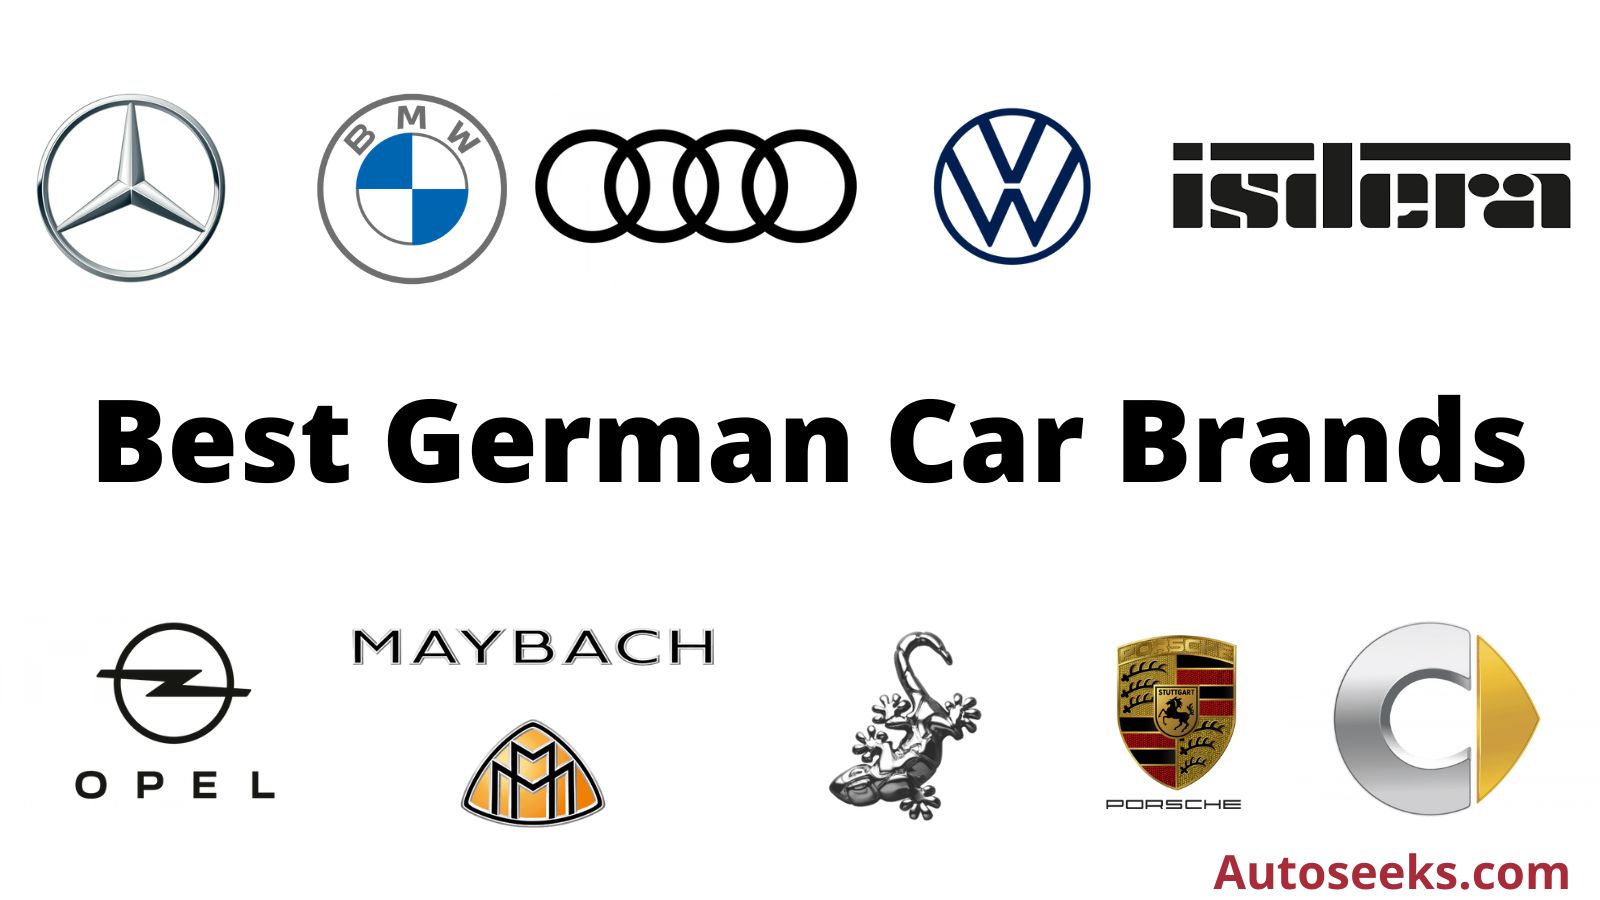 best german car brands